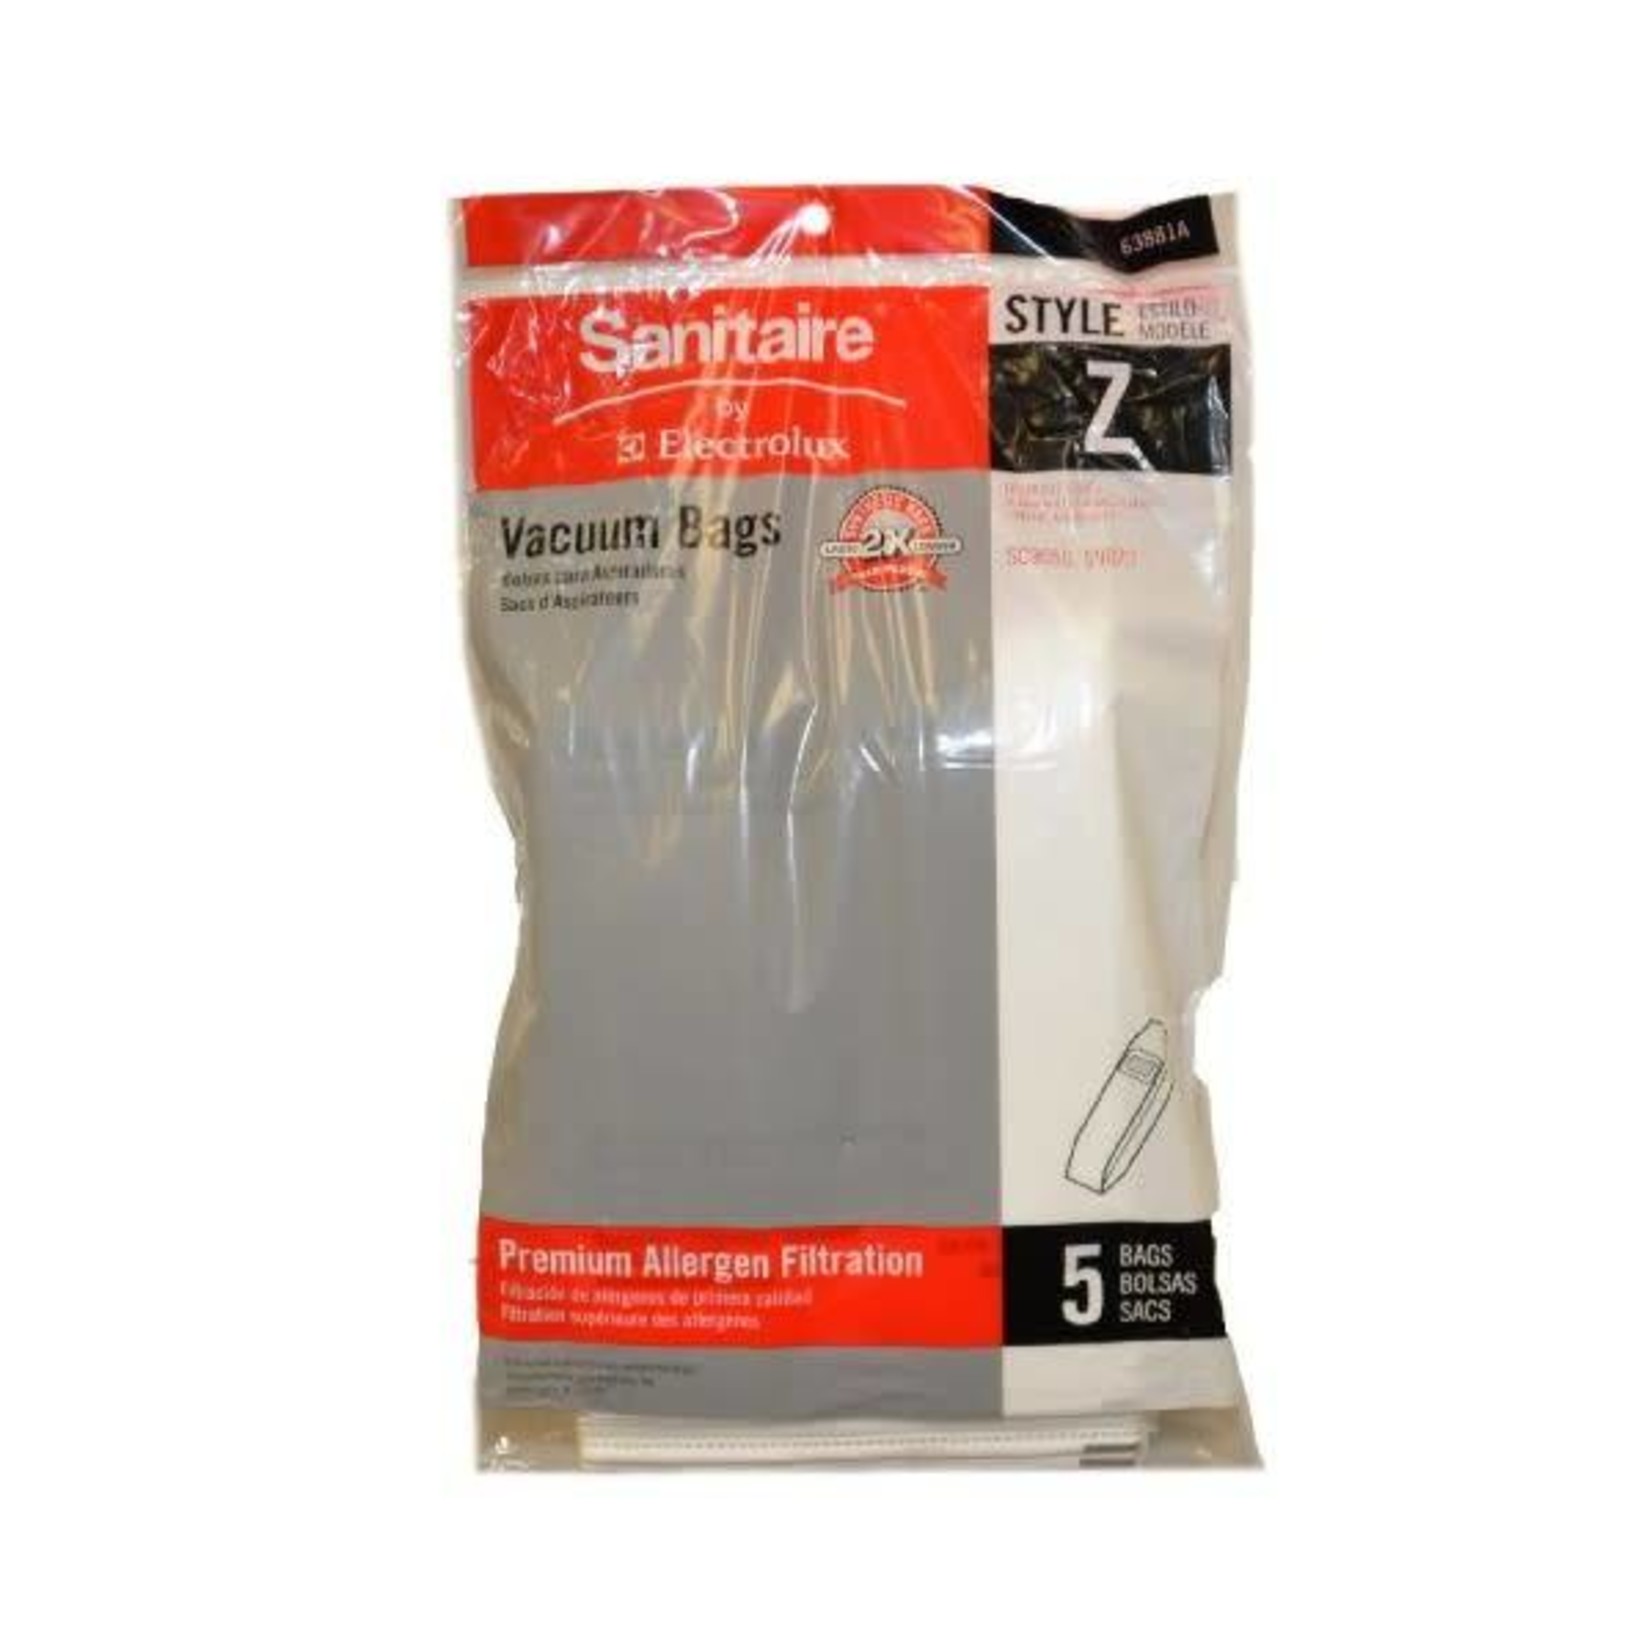 Sanitaire Sanitaire Style "Z" HEPA Bag (5pk)